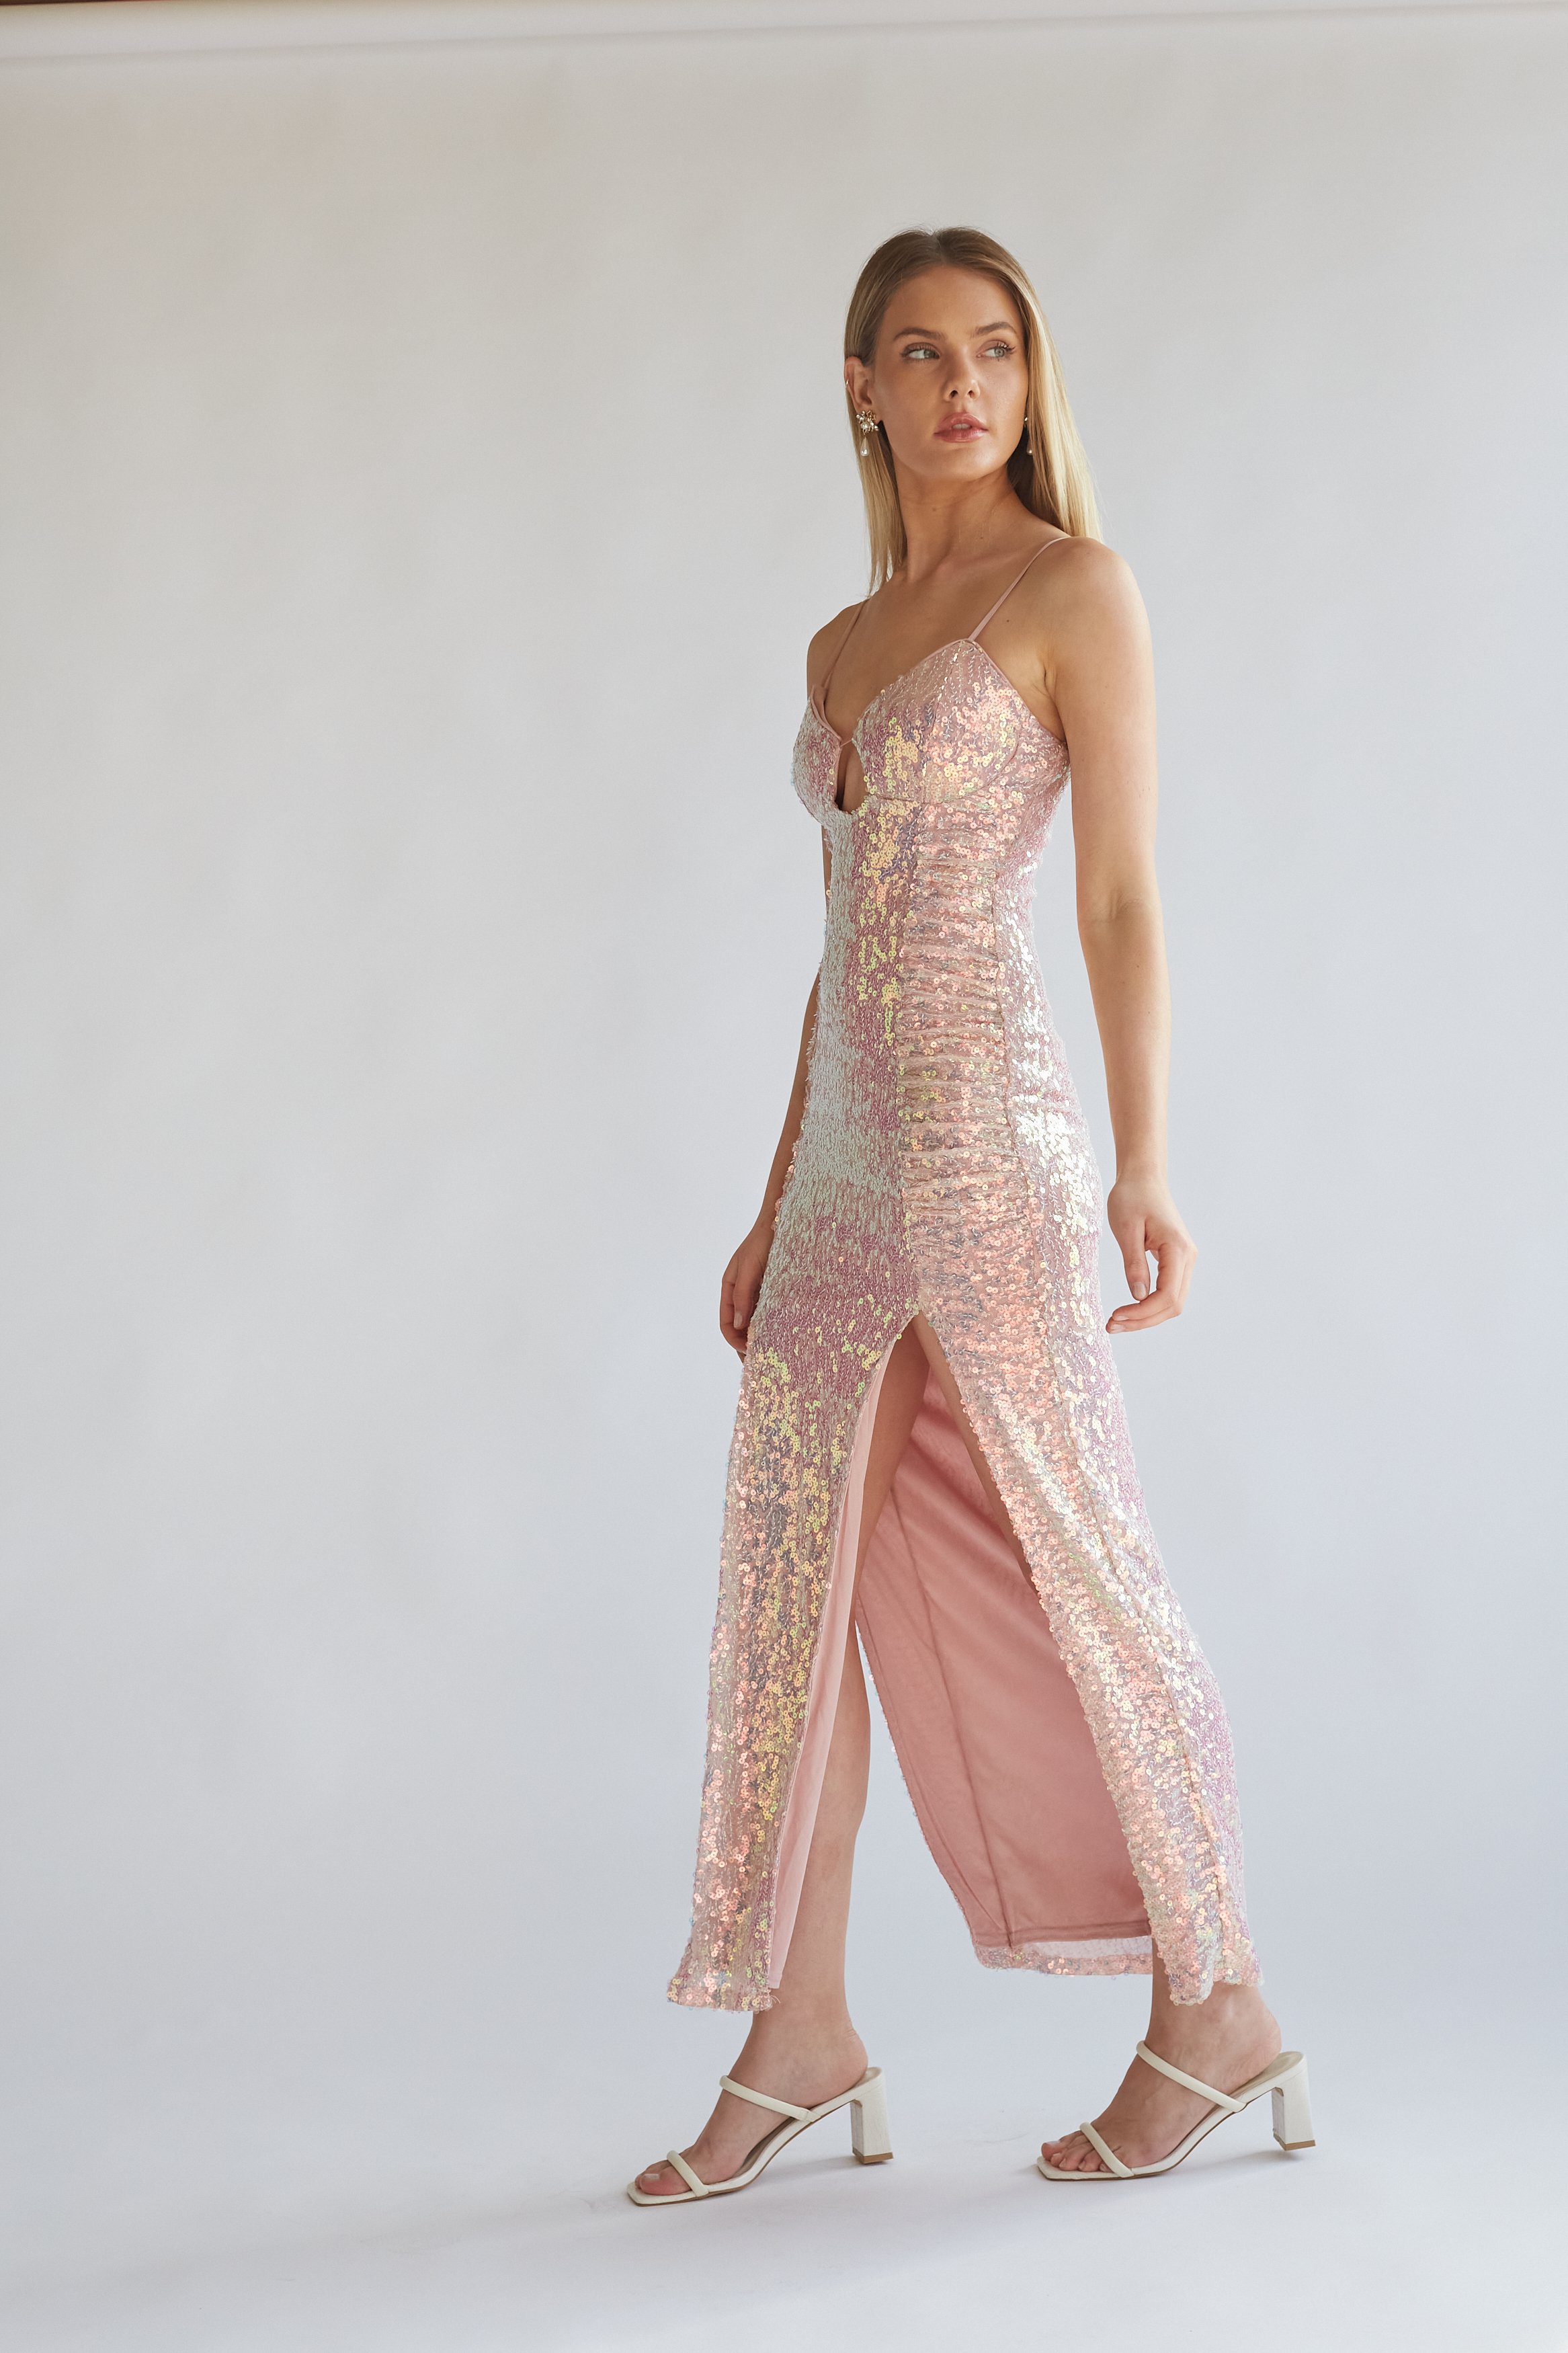 adelaide-pink-sequin-keyhole-midi-dress-8.jpg